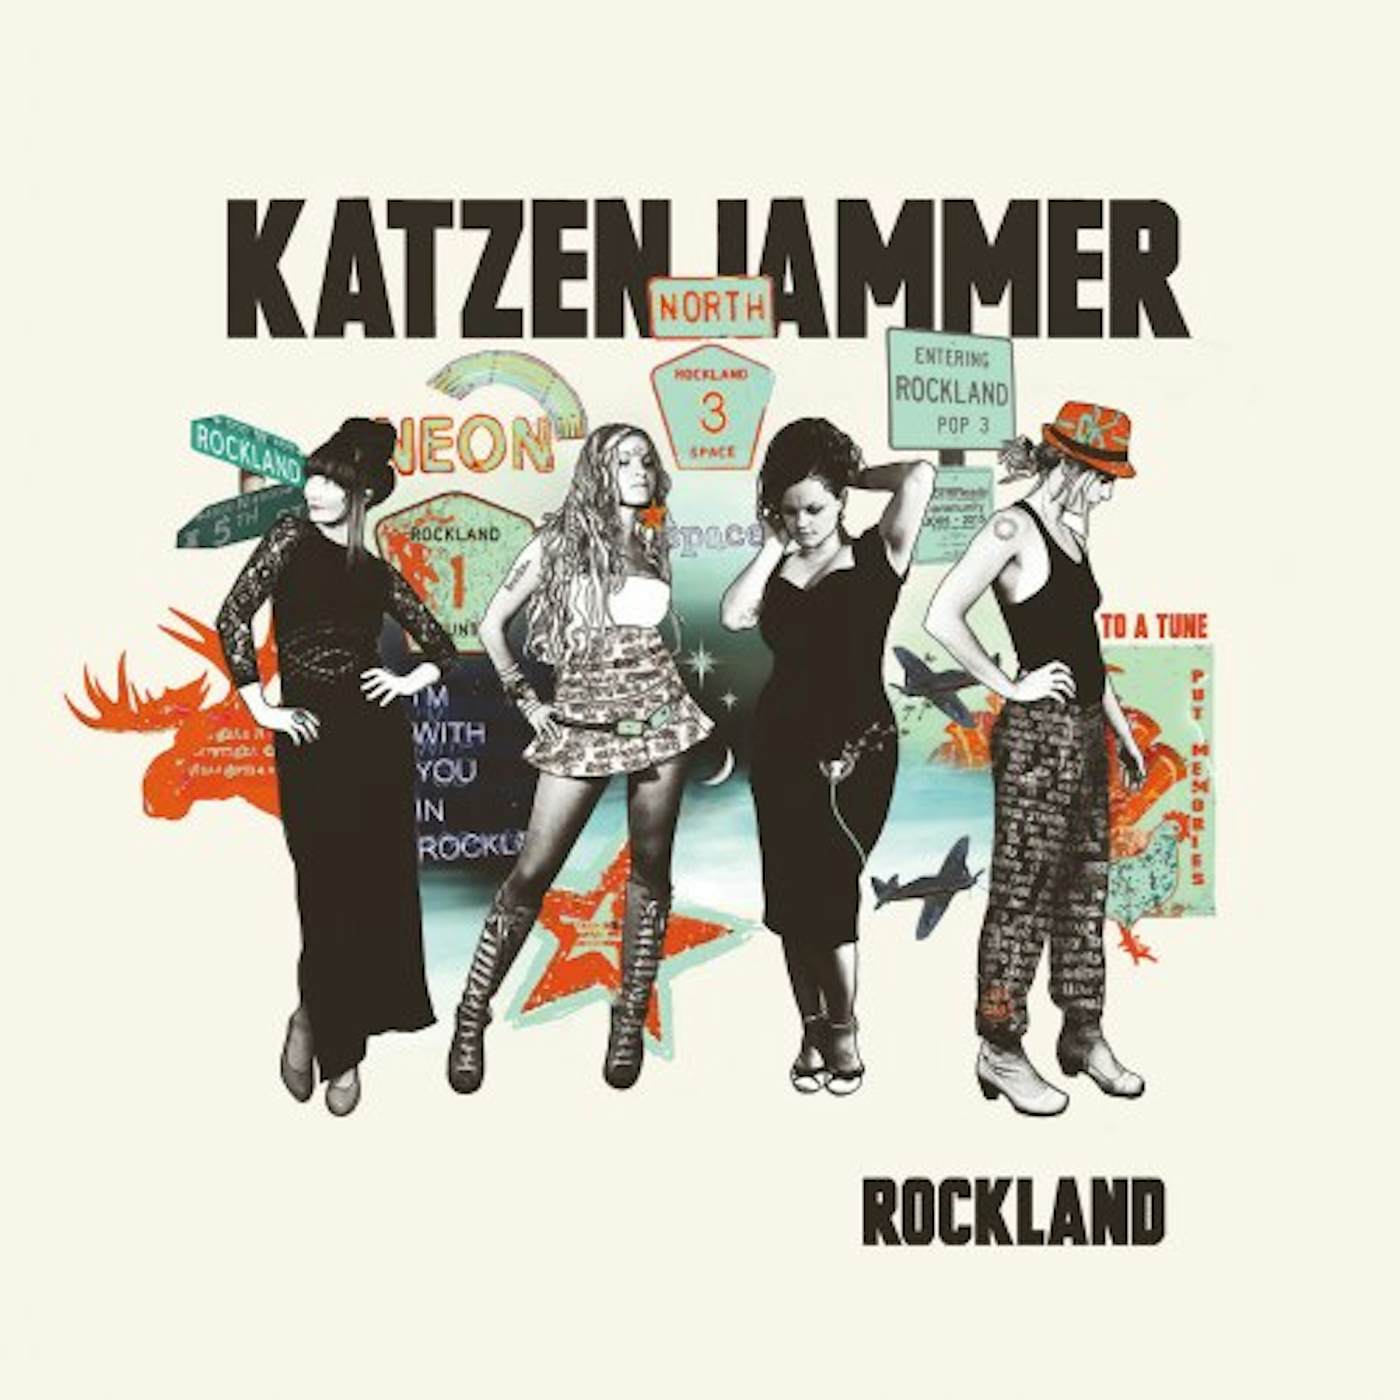 Katzenjammer ROCKLAND CD